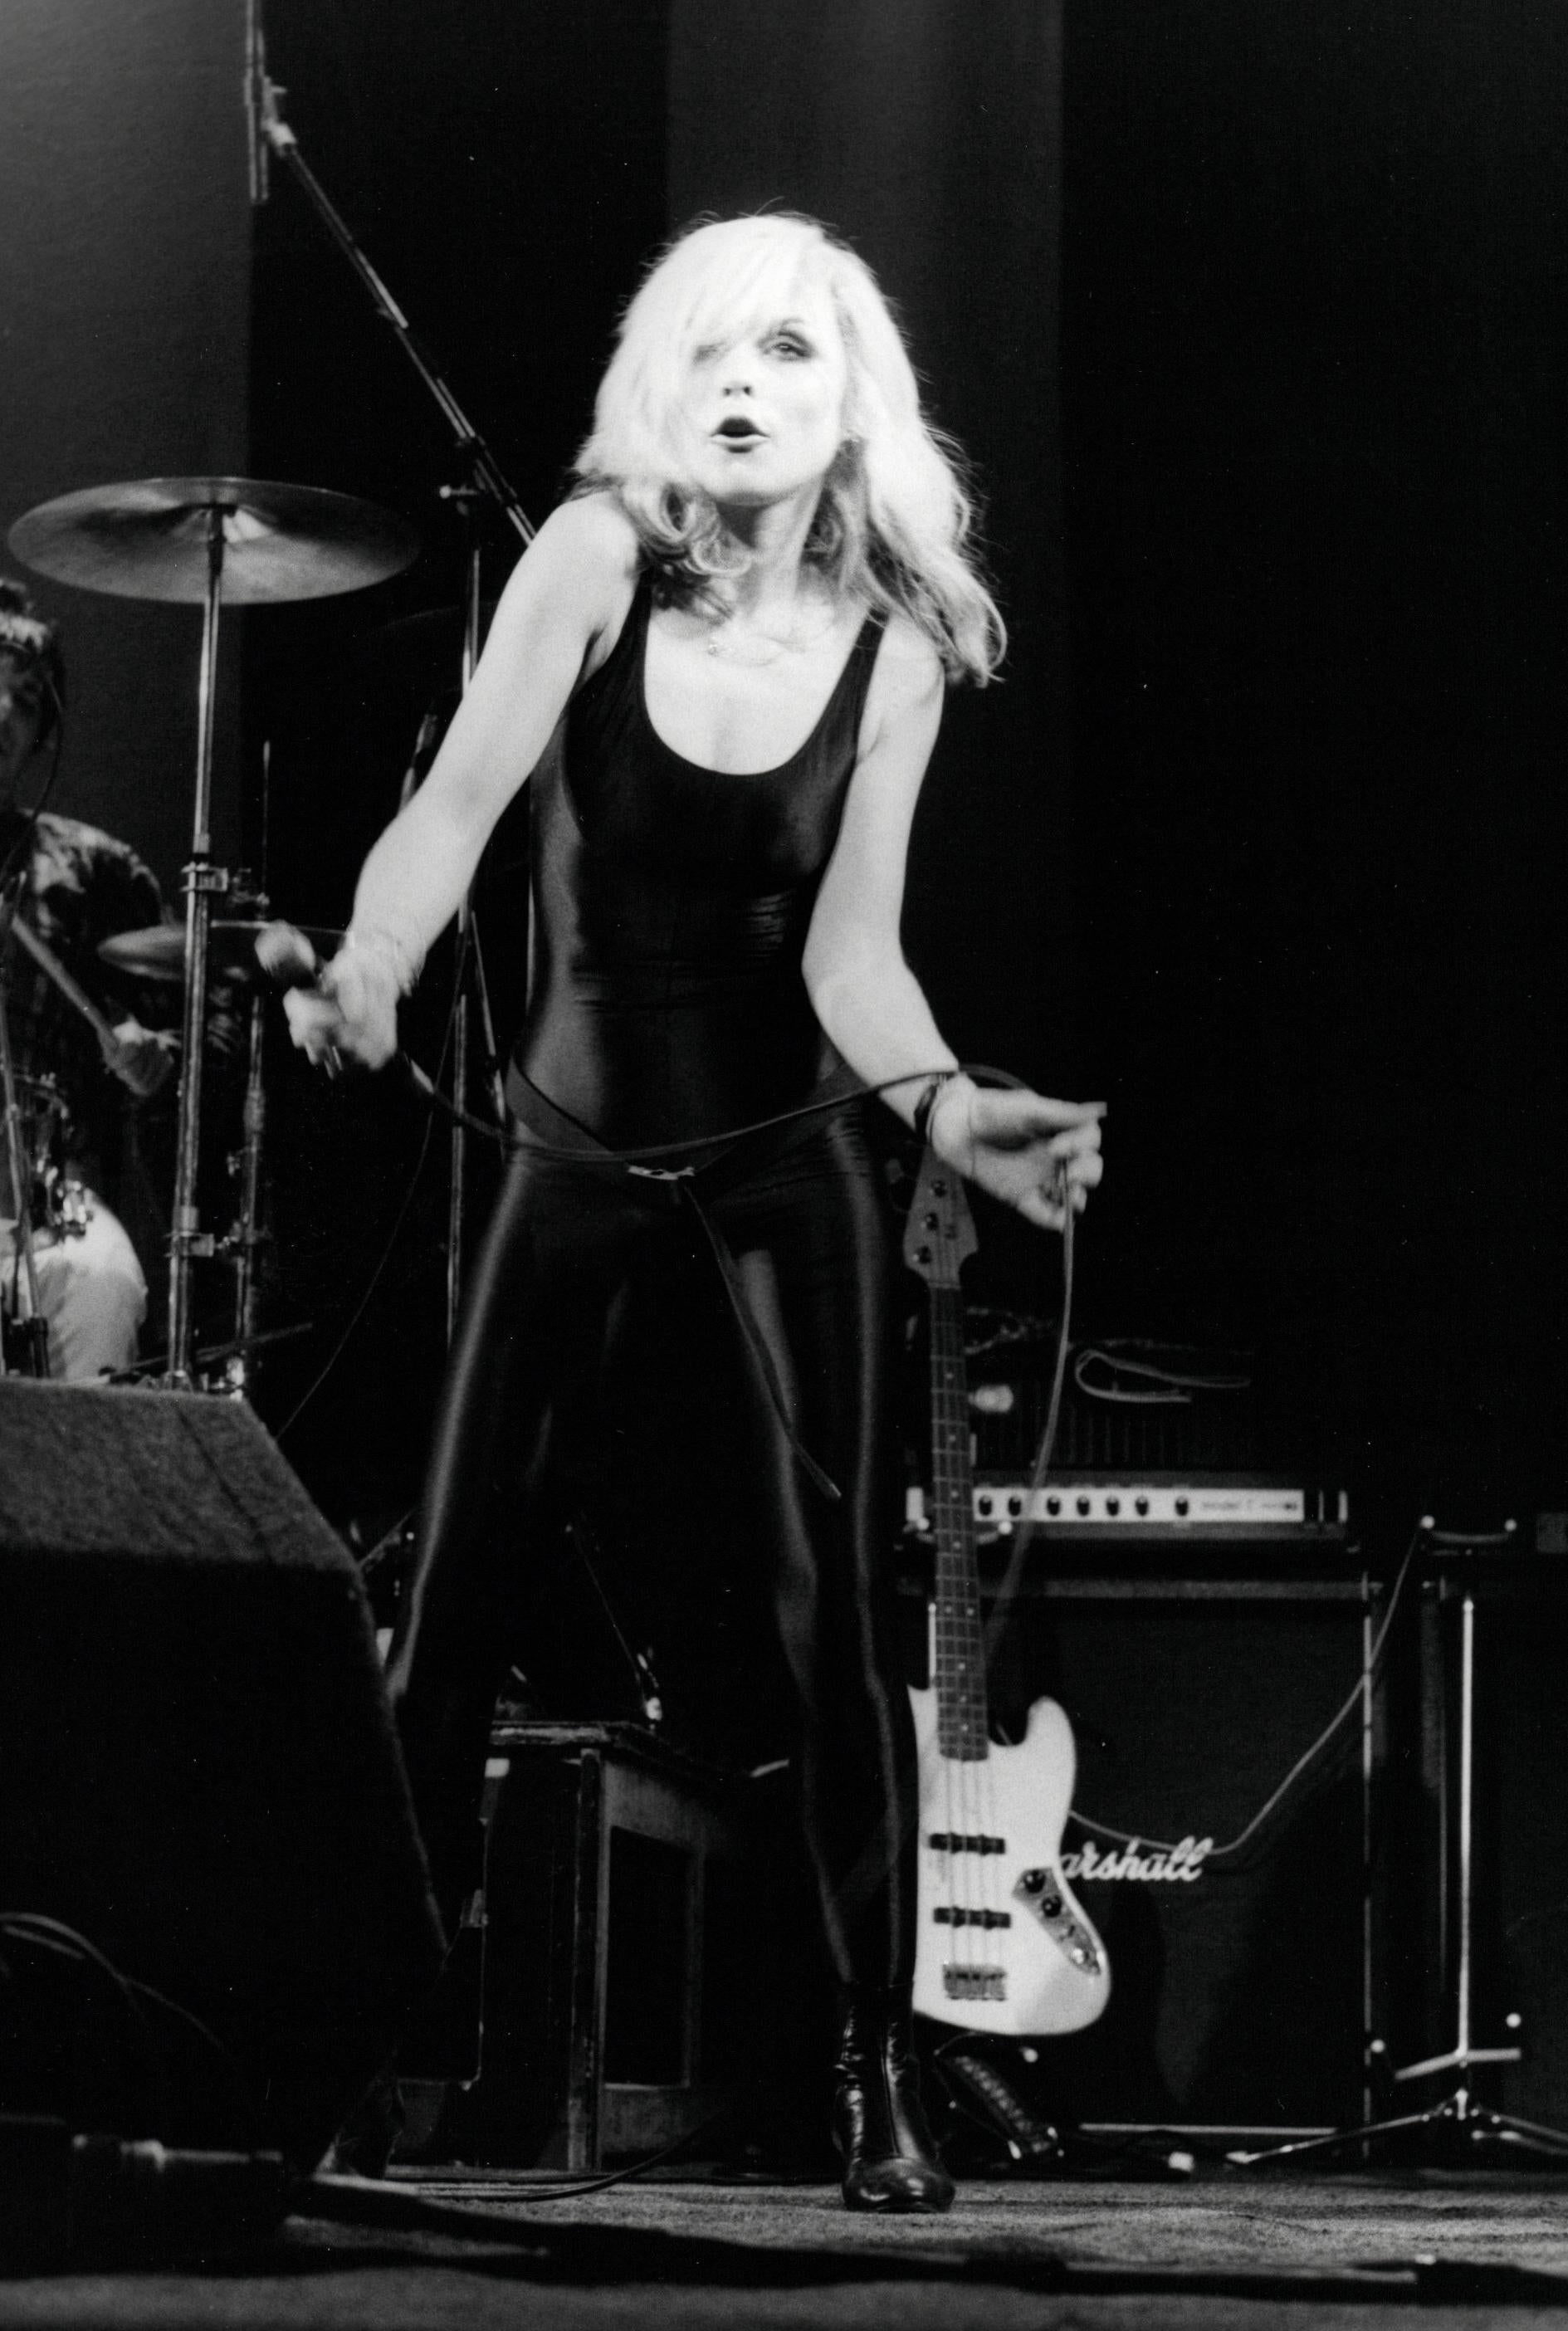 Paul Cox Black and White Photograph - Debbie Harry of Blondie Performing in Black Leotard Vintage Original Photograph